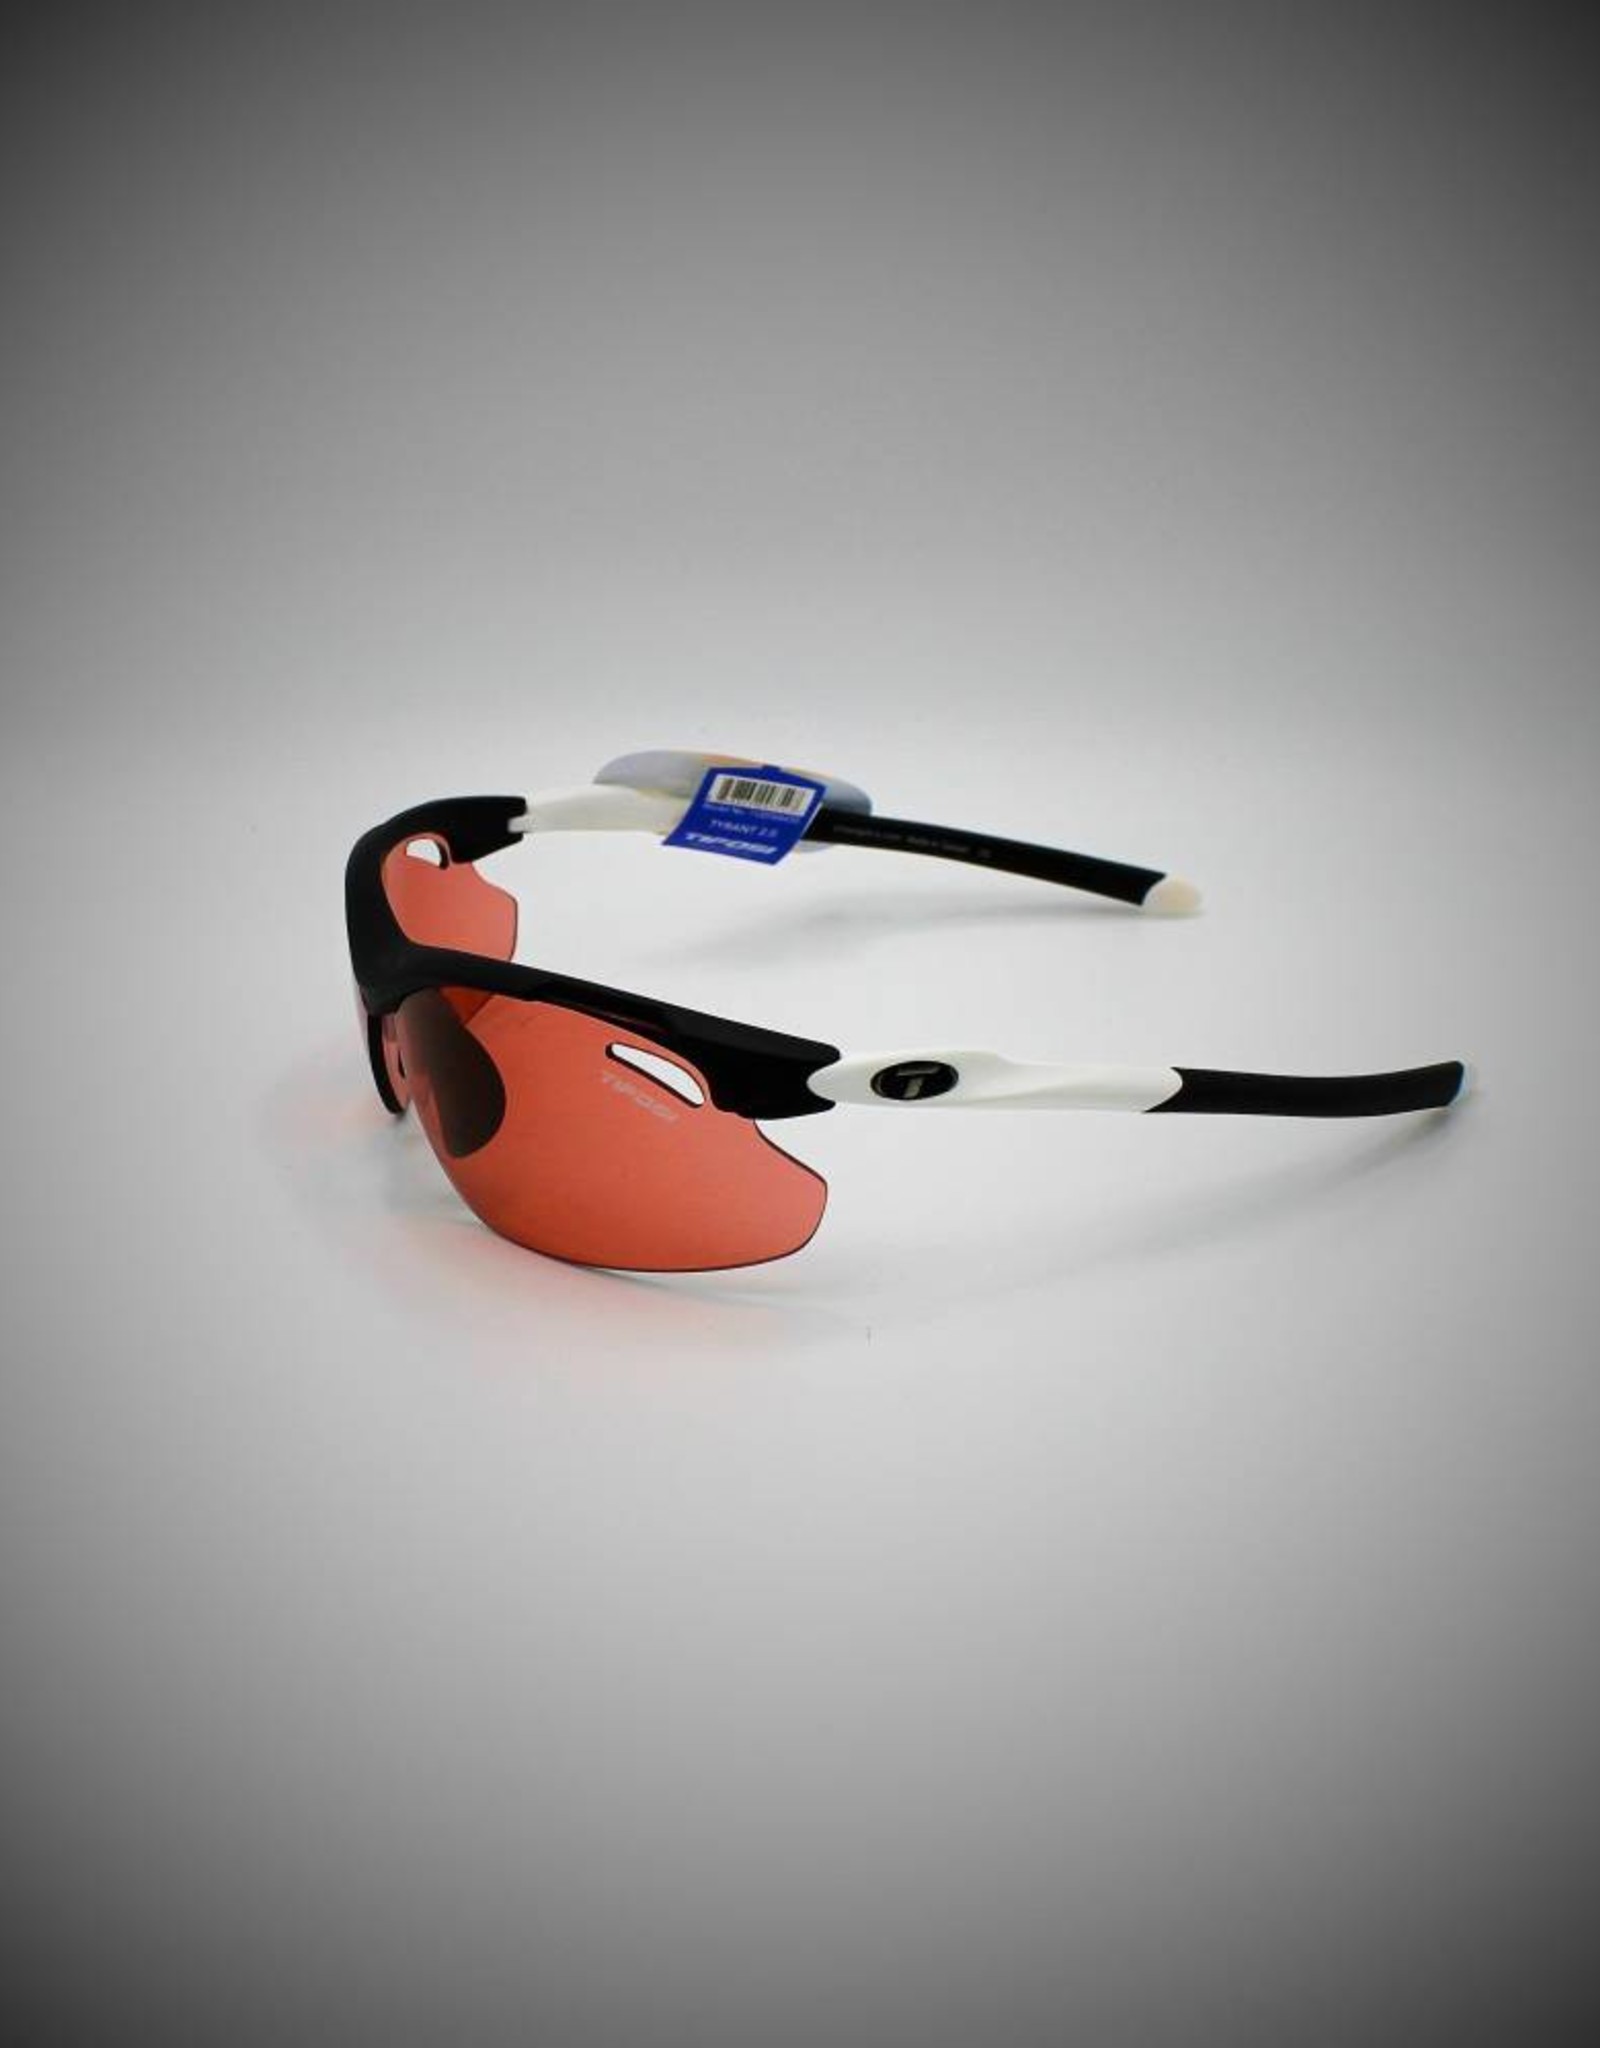 Tifosi Optics Tyrant 2.0, Black/White Fototec Sunglasses